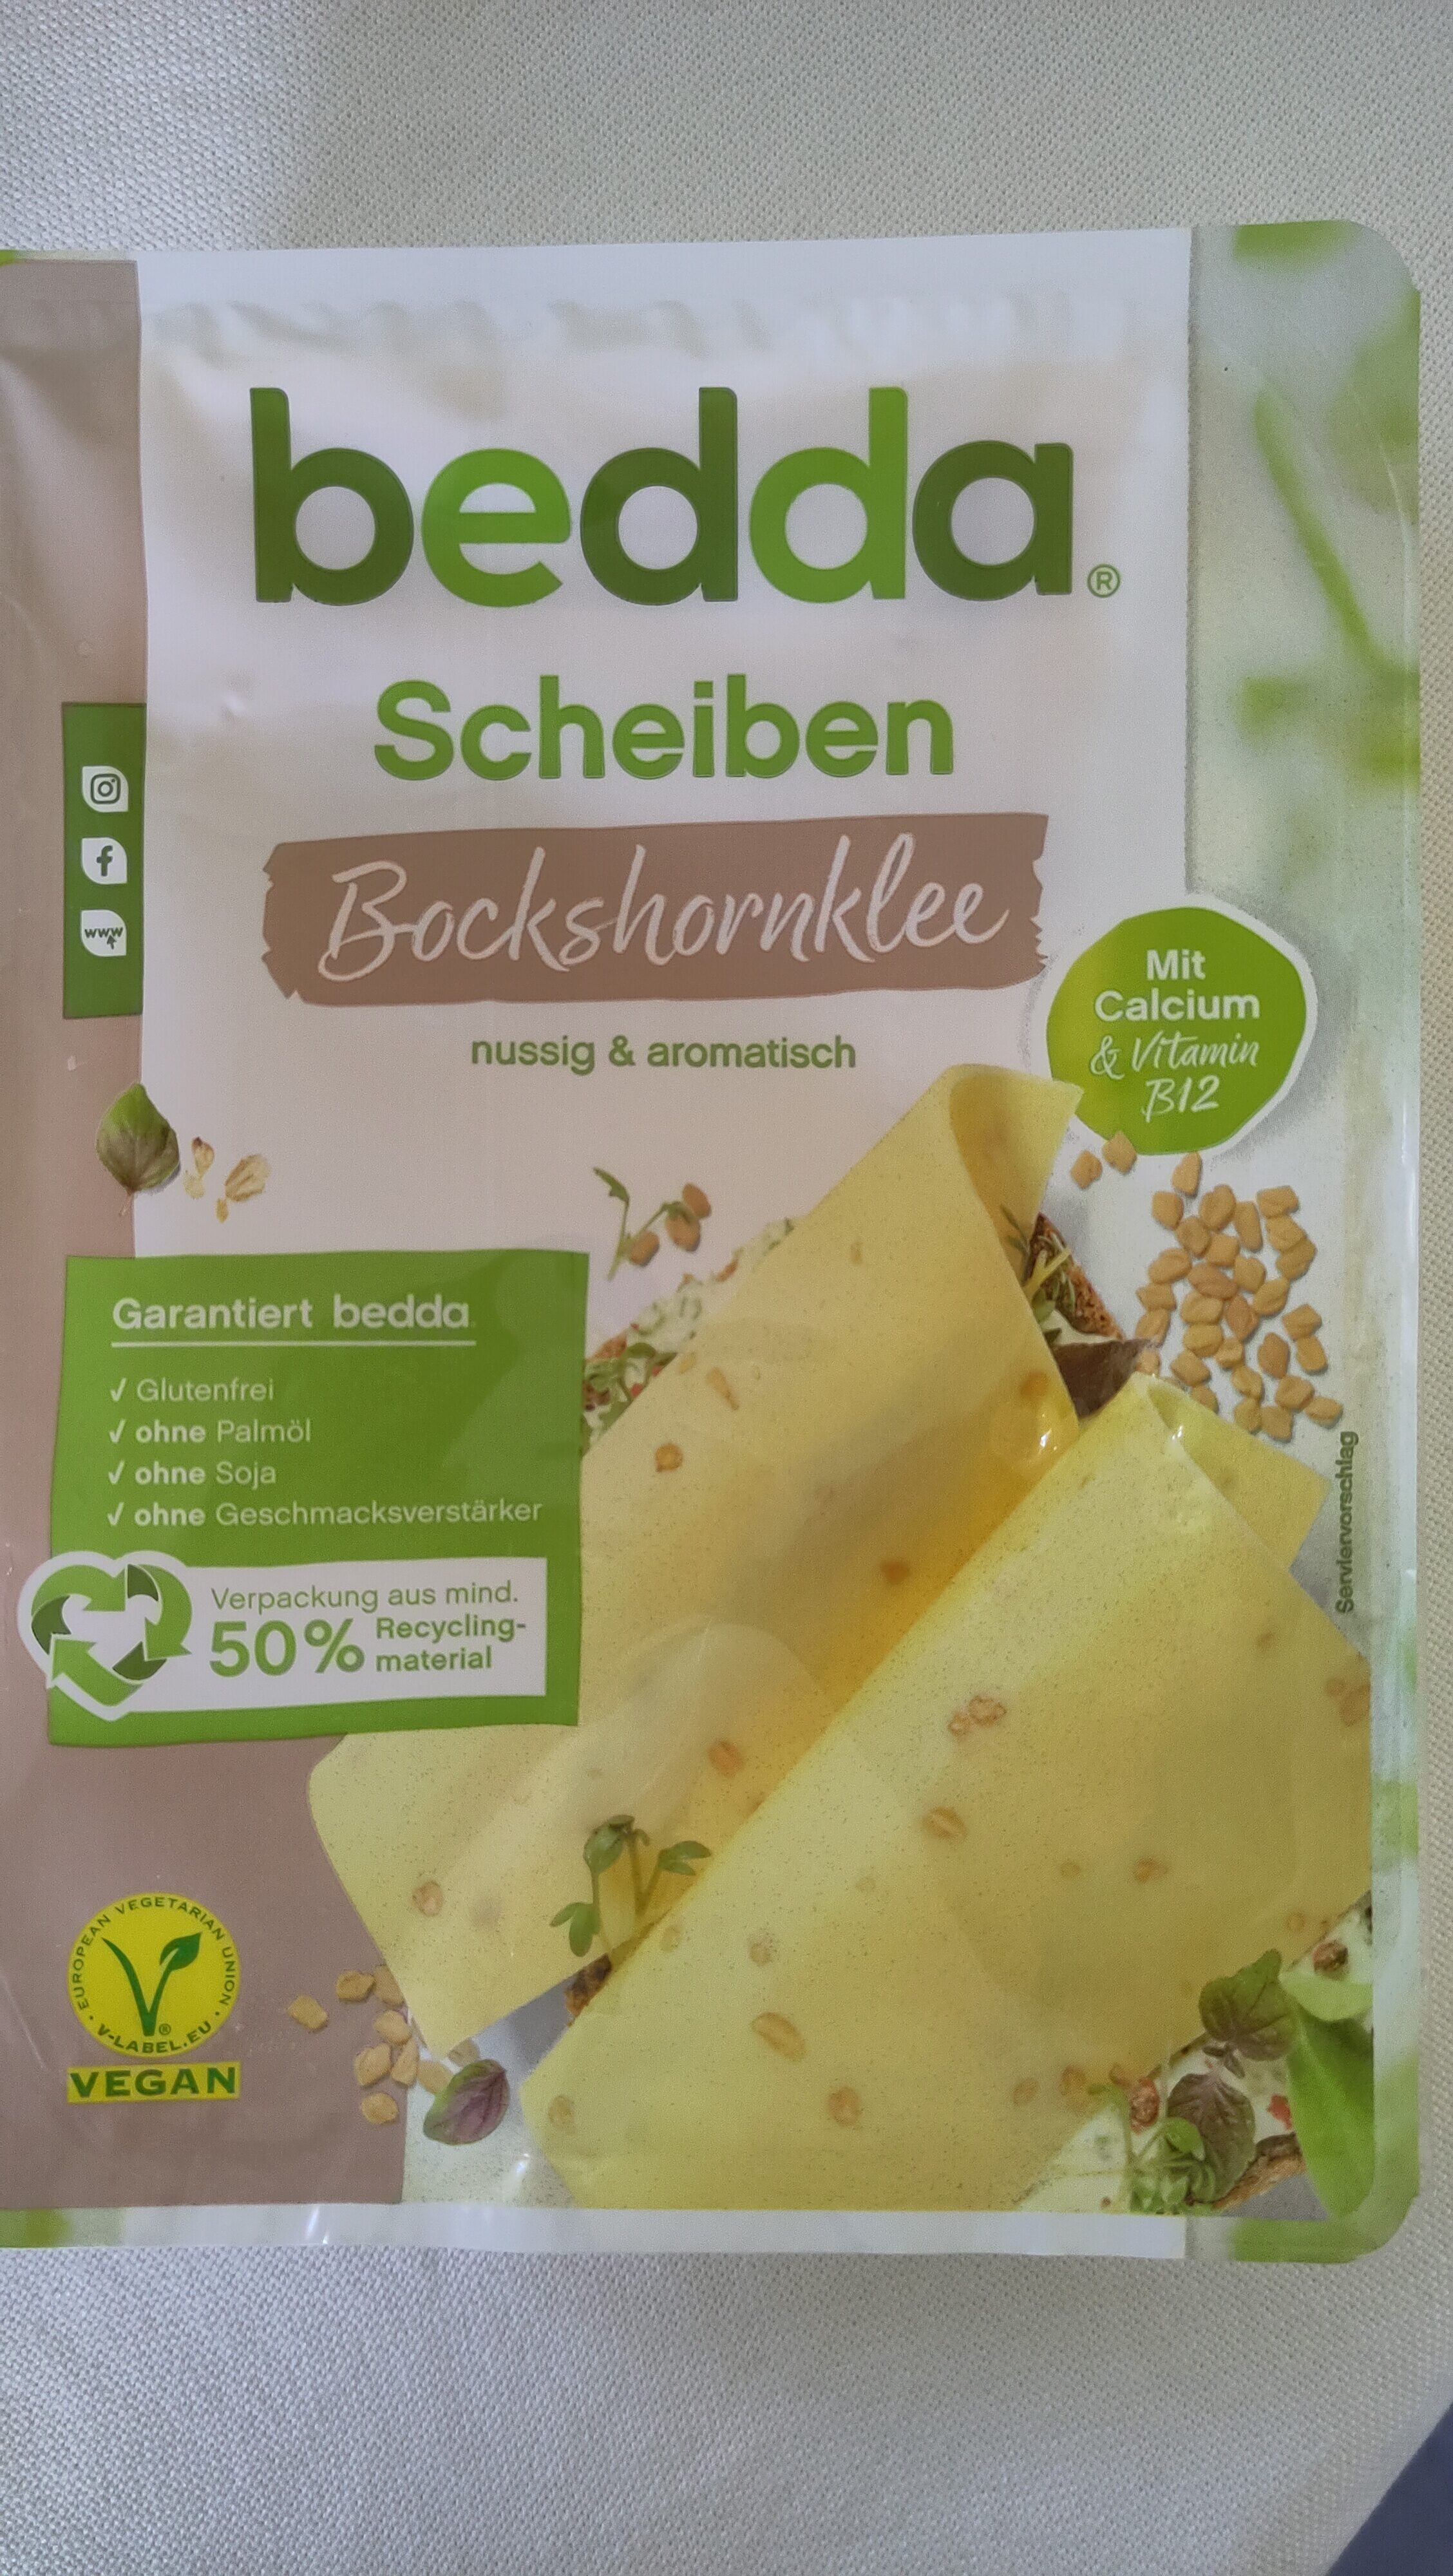 Bedda Scheiben Bockshornklee - Product - de